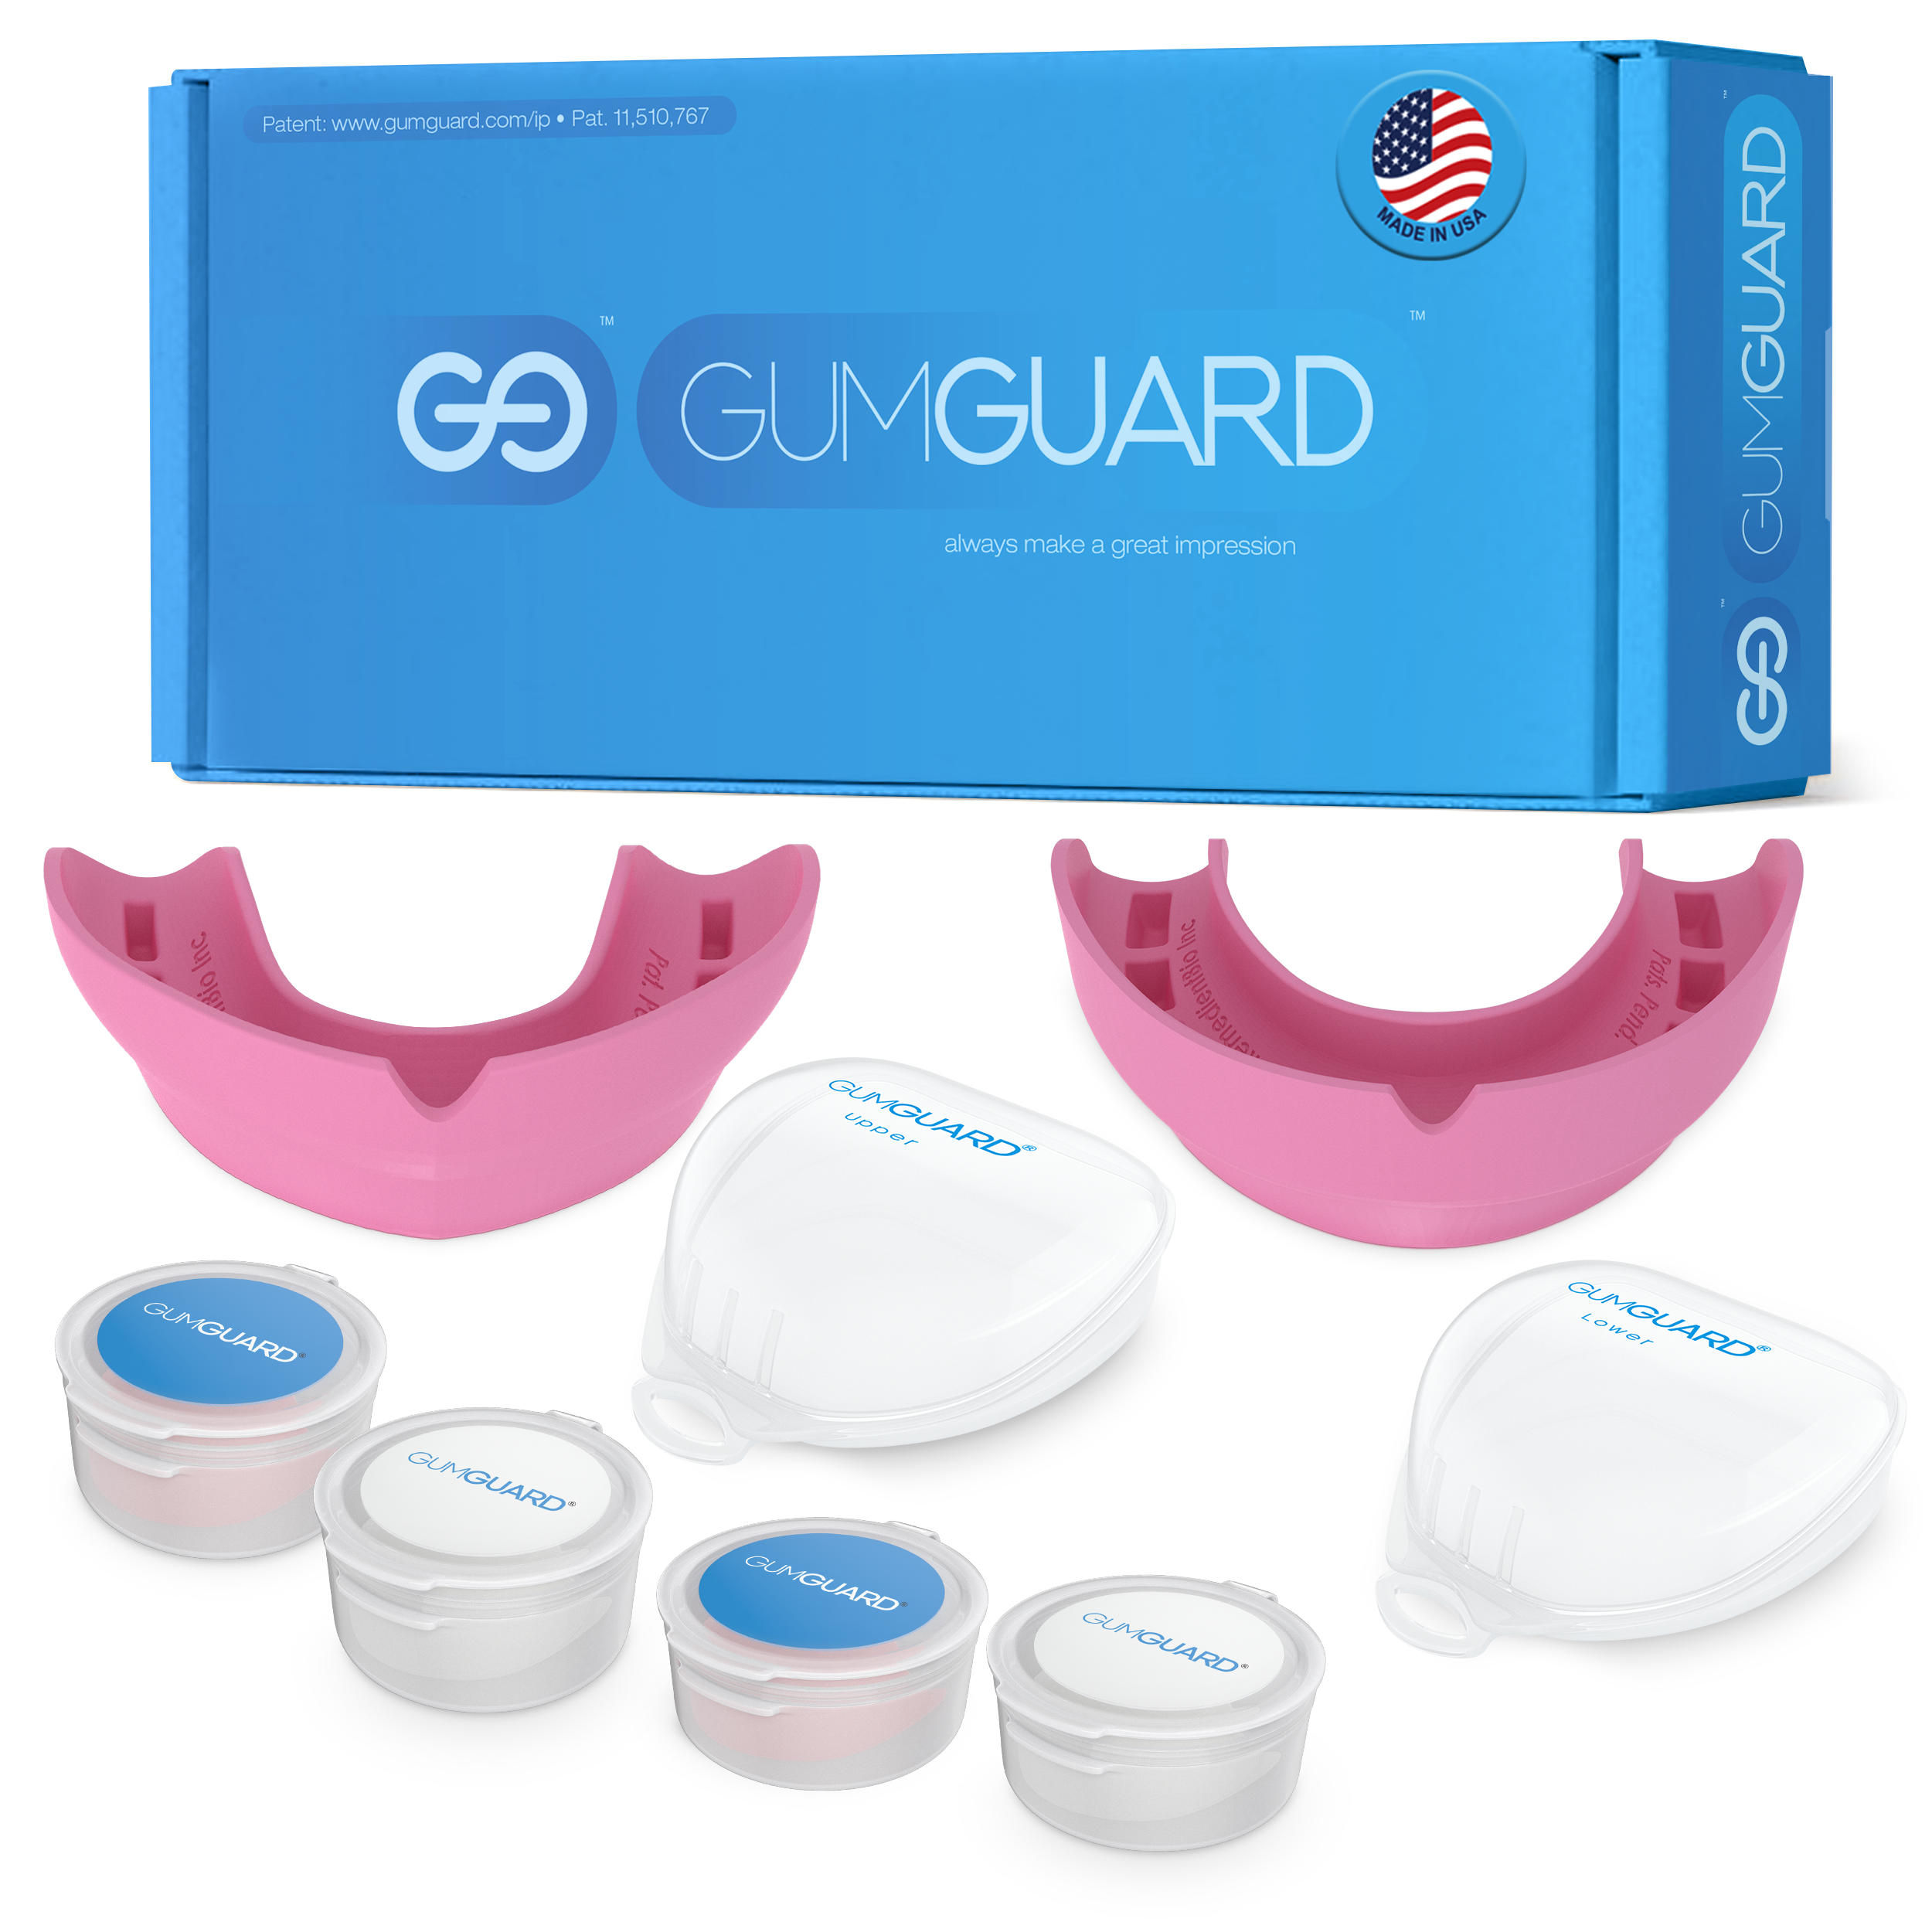 GumGuard® UltraSoft PM Upper & Lower Set | Pink